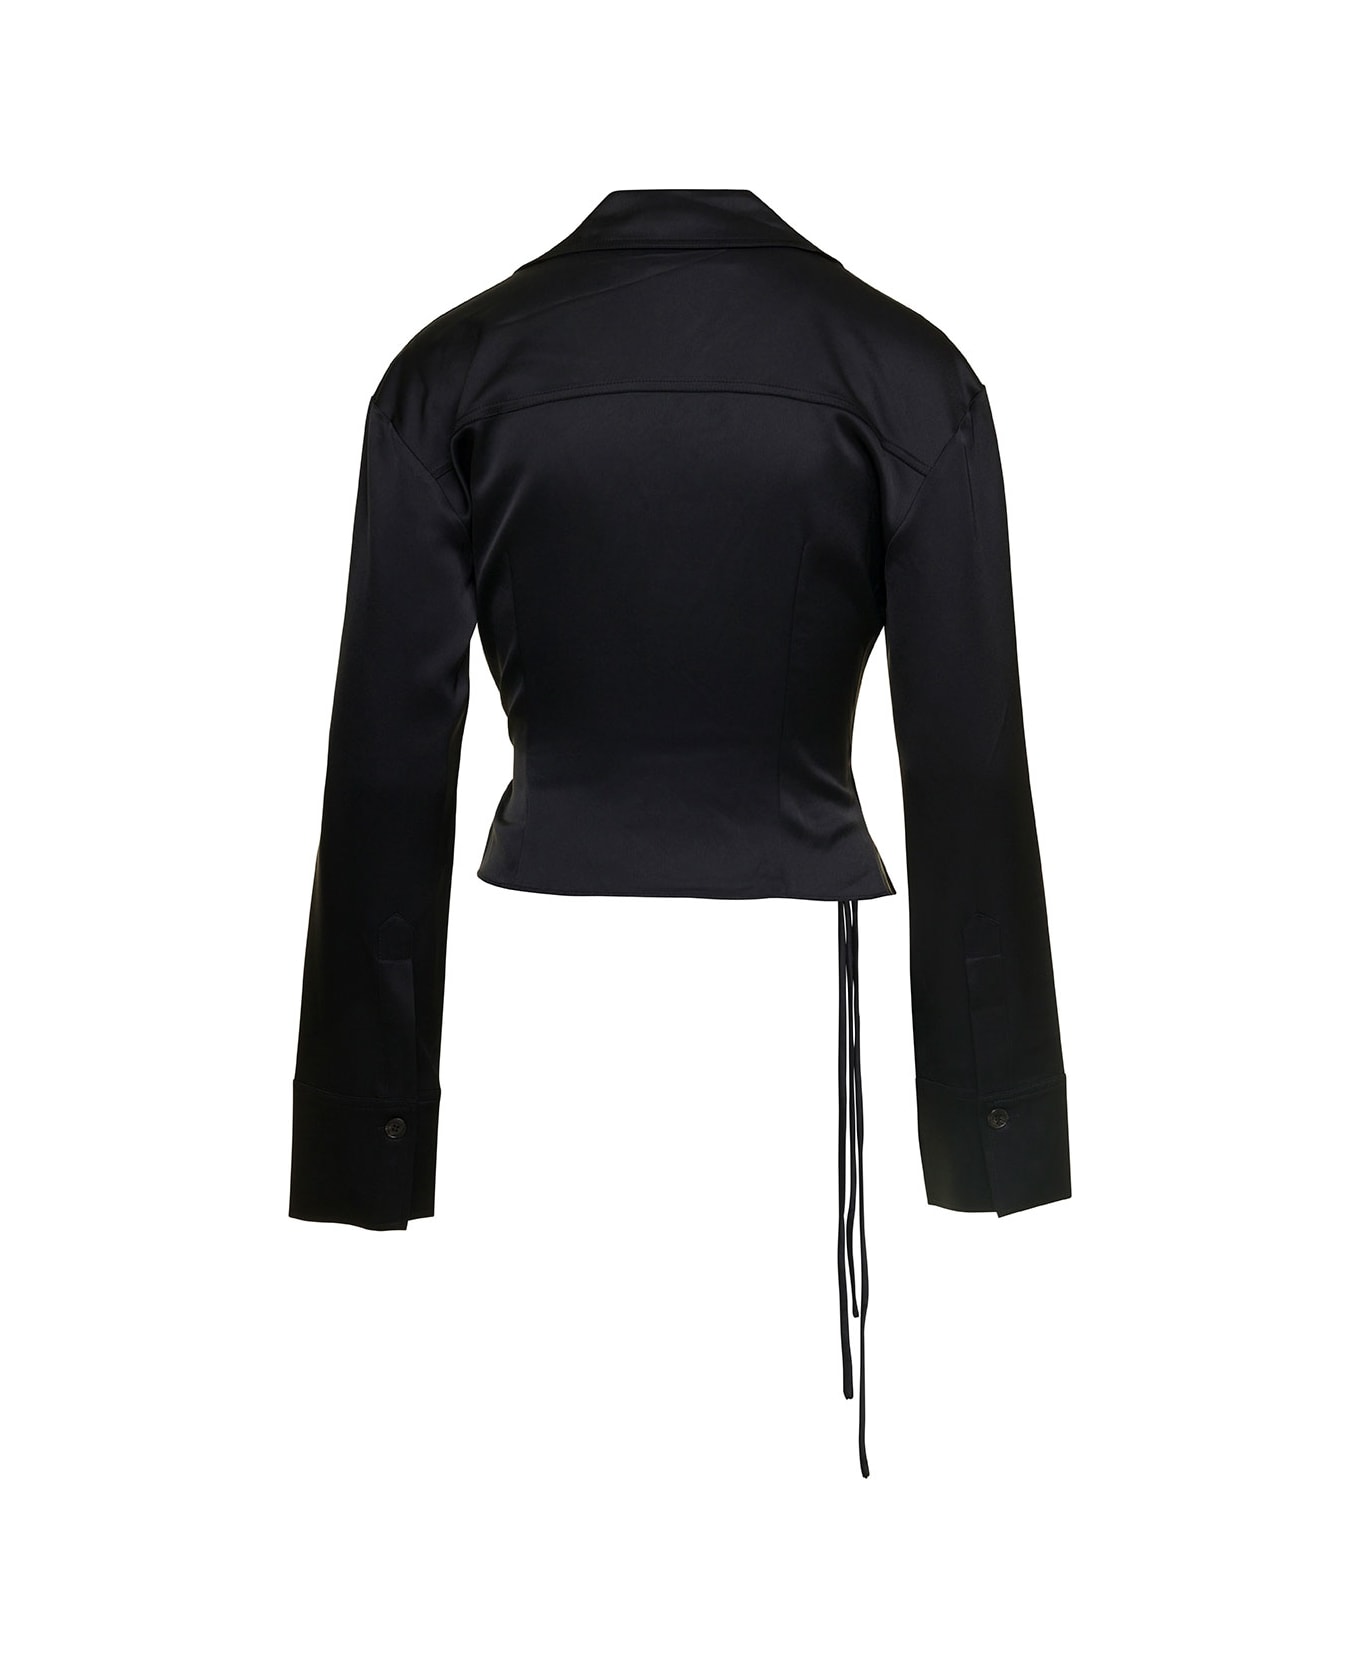 Nanushka Black Shirt With Cuban Collar In Satin Fabric Woman - Black シャツ